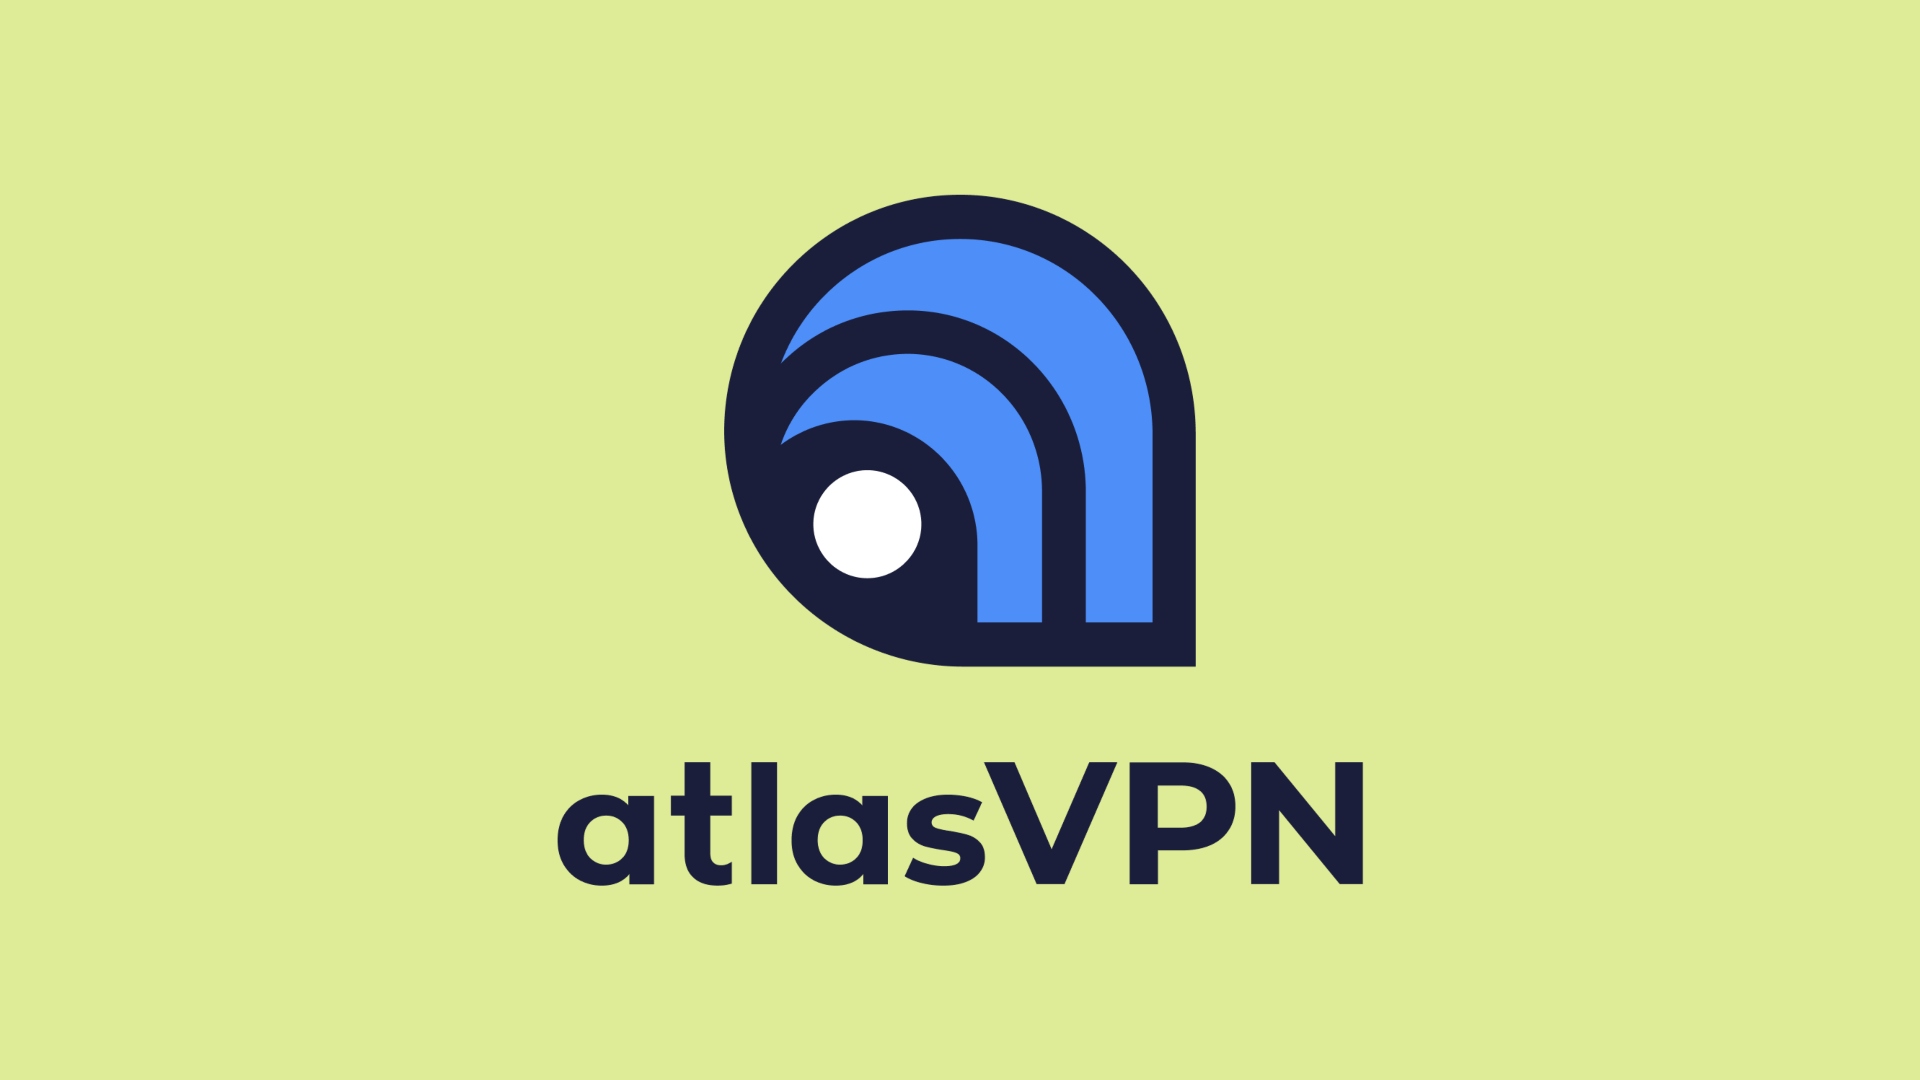 Best VPNs for Xbox - AtlasVPN. Image shows the company's logo.